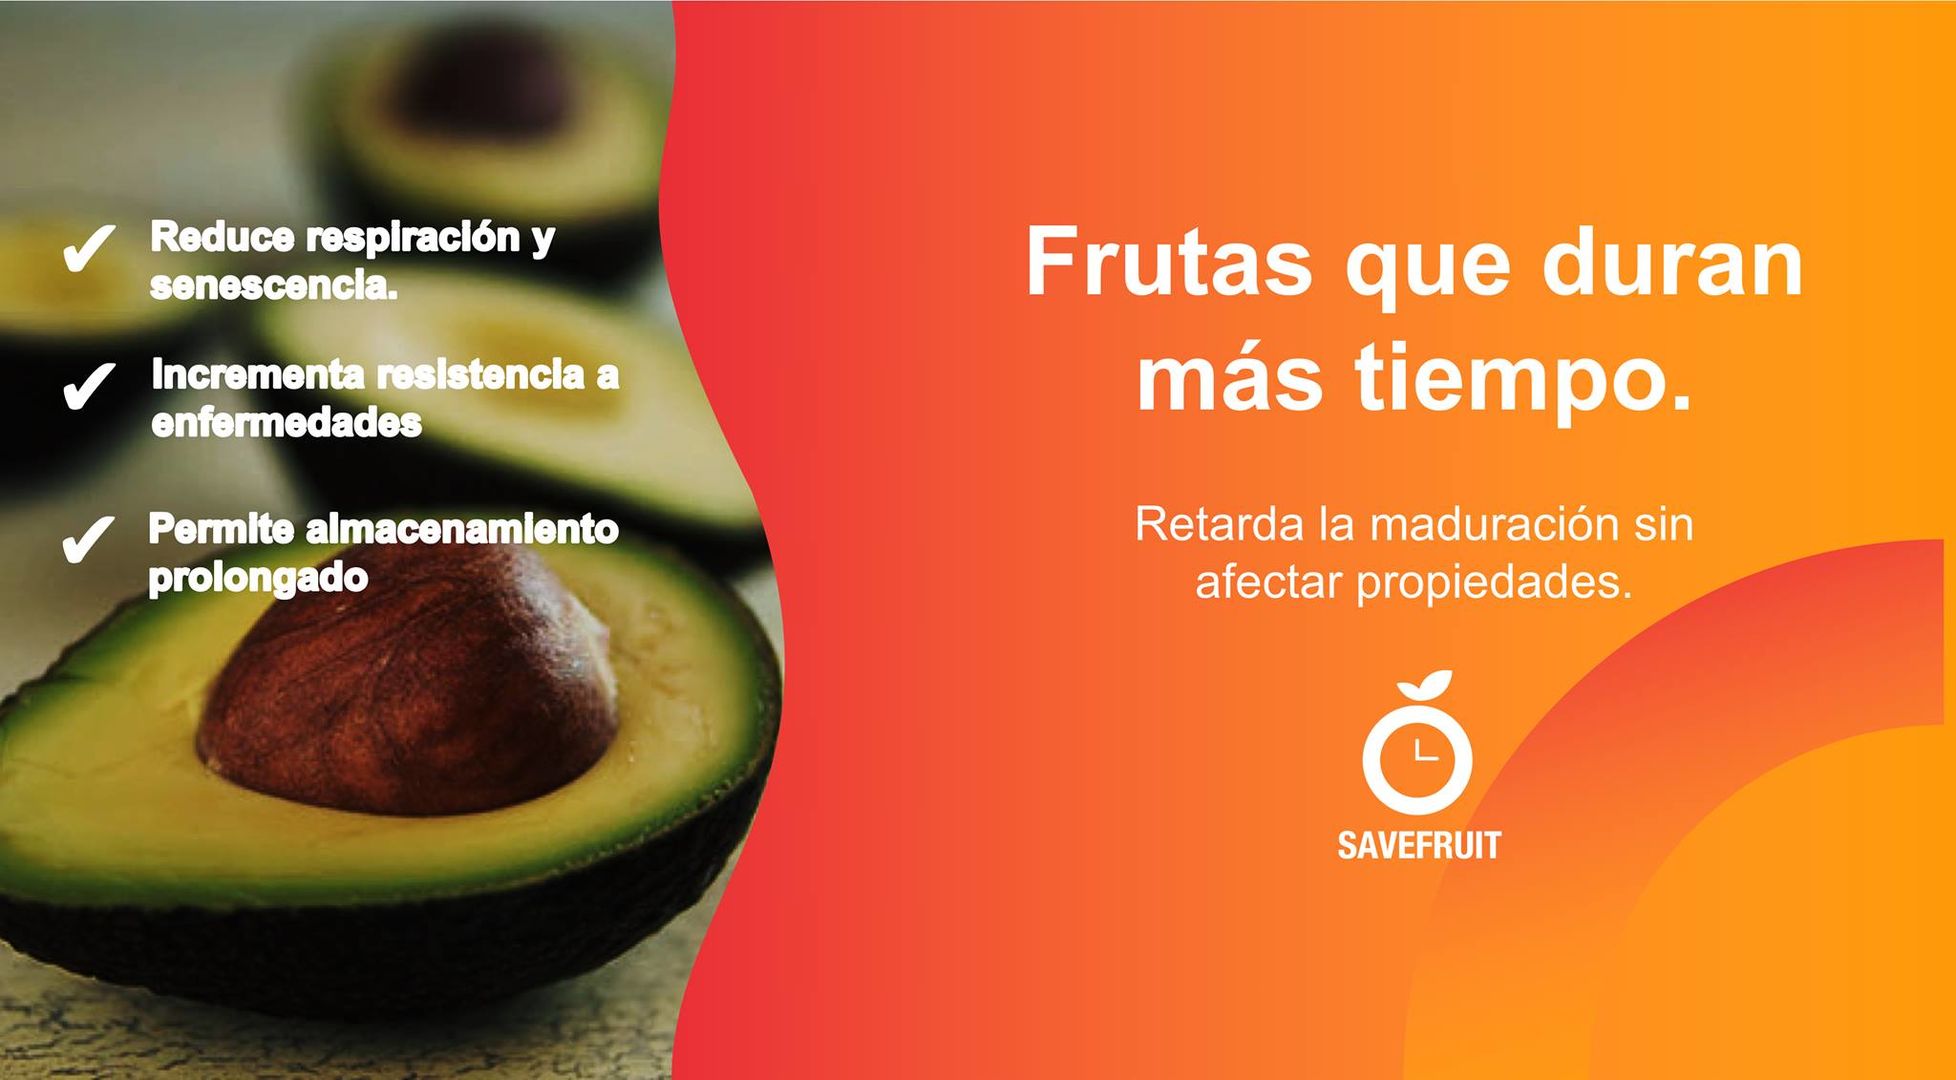 Save fruit